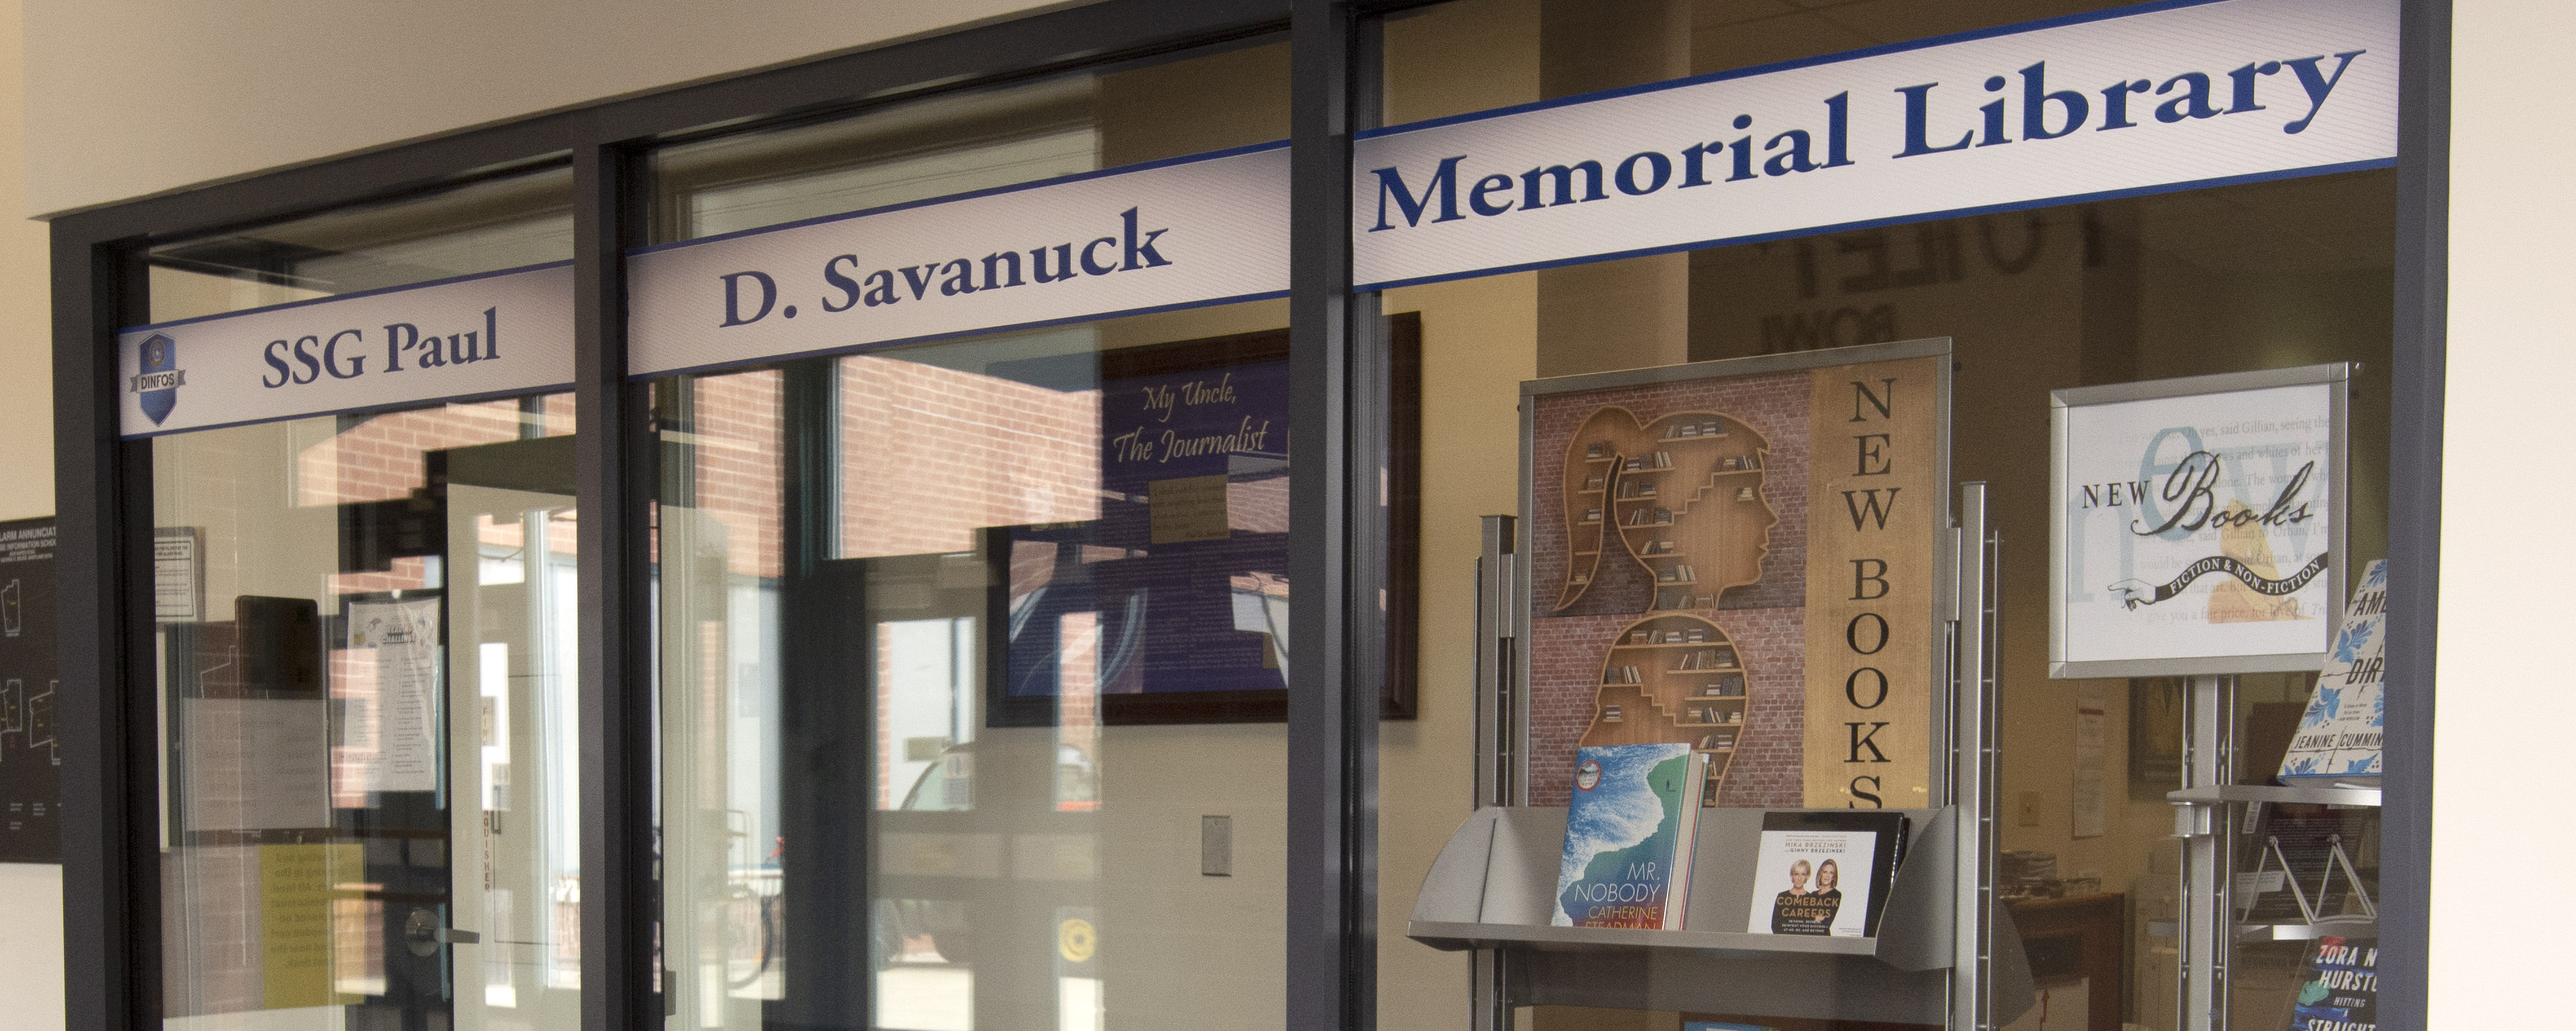 Image of Paul D. Savanuck Memorial Library entrance